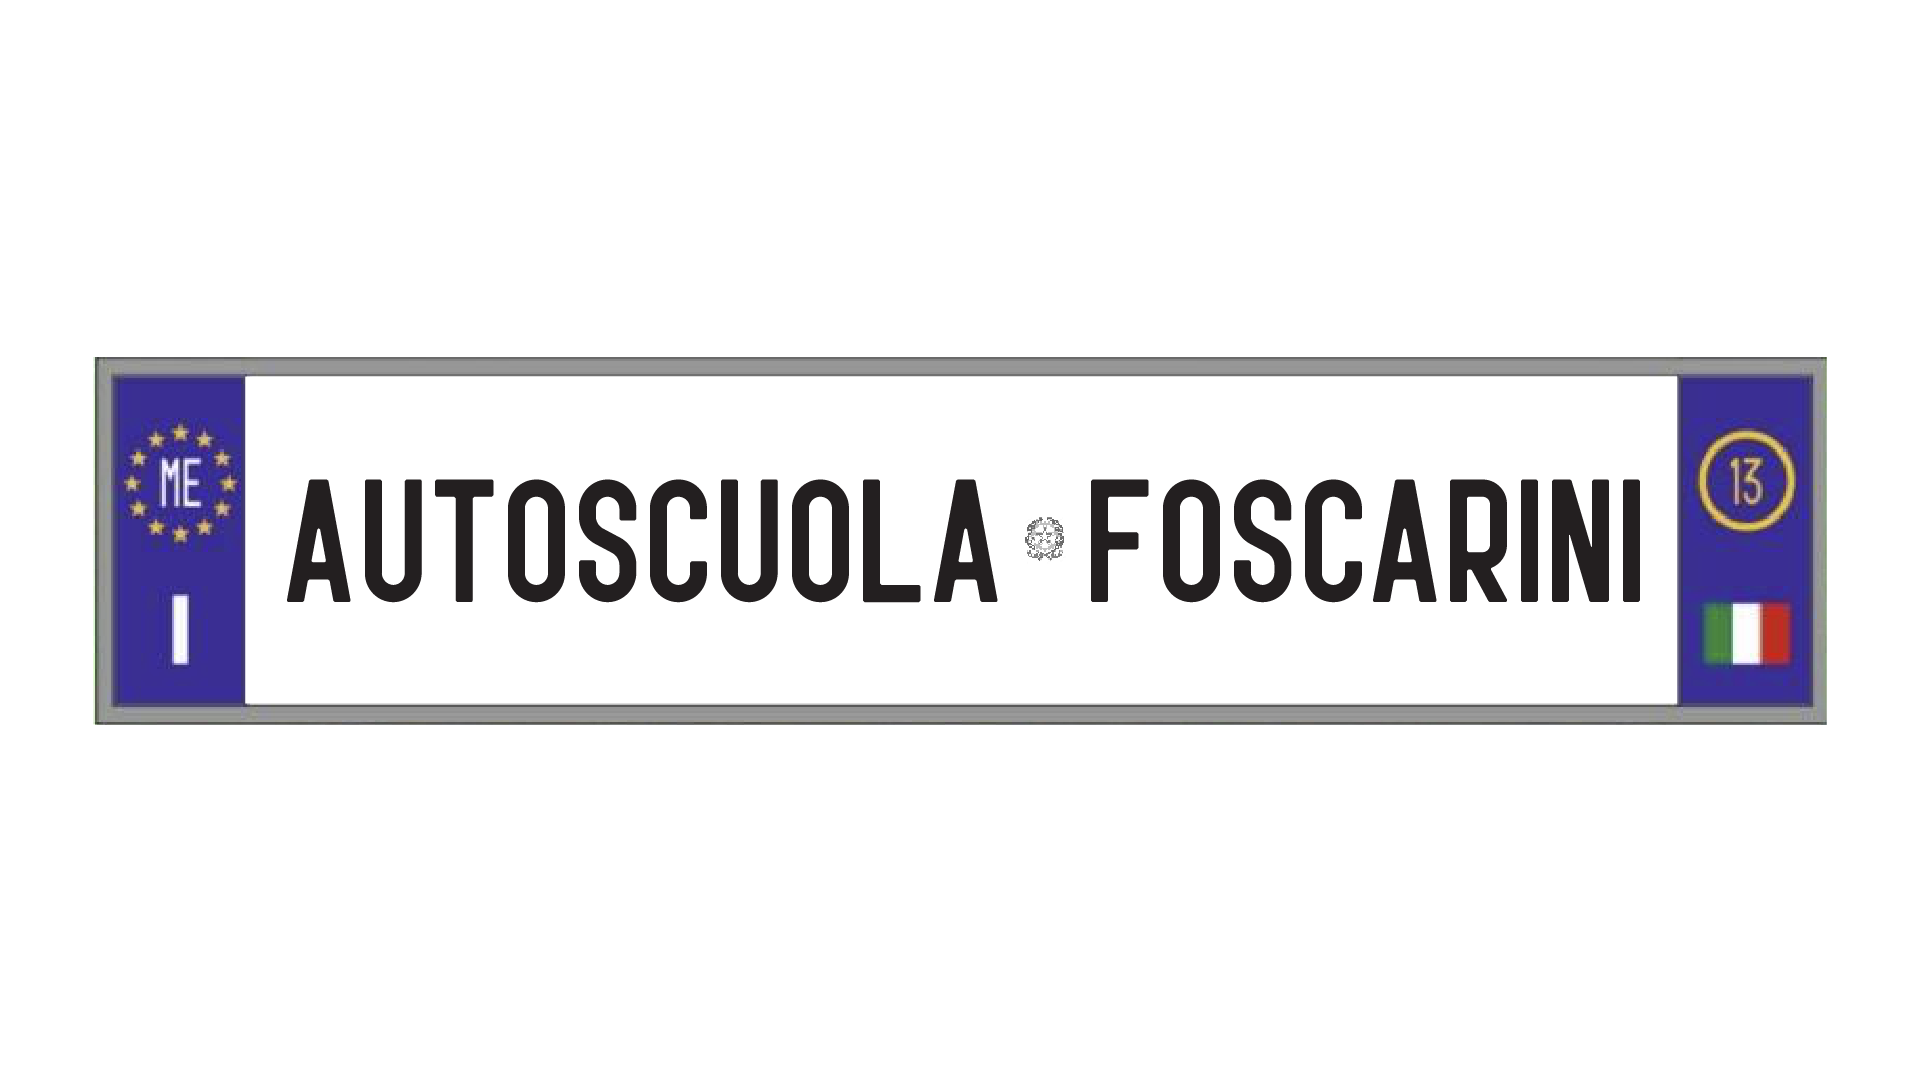 Autoscuola Foscarini